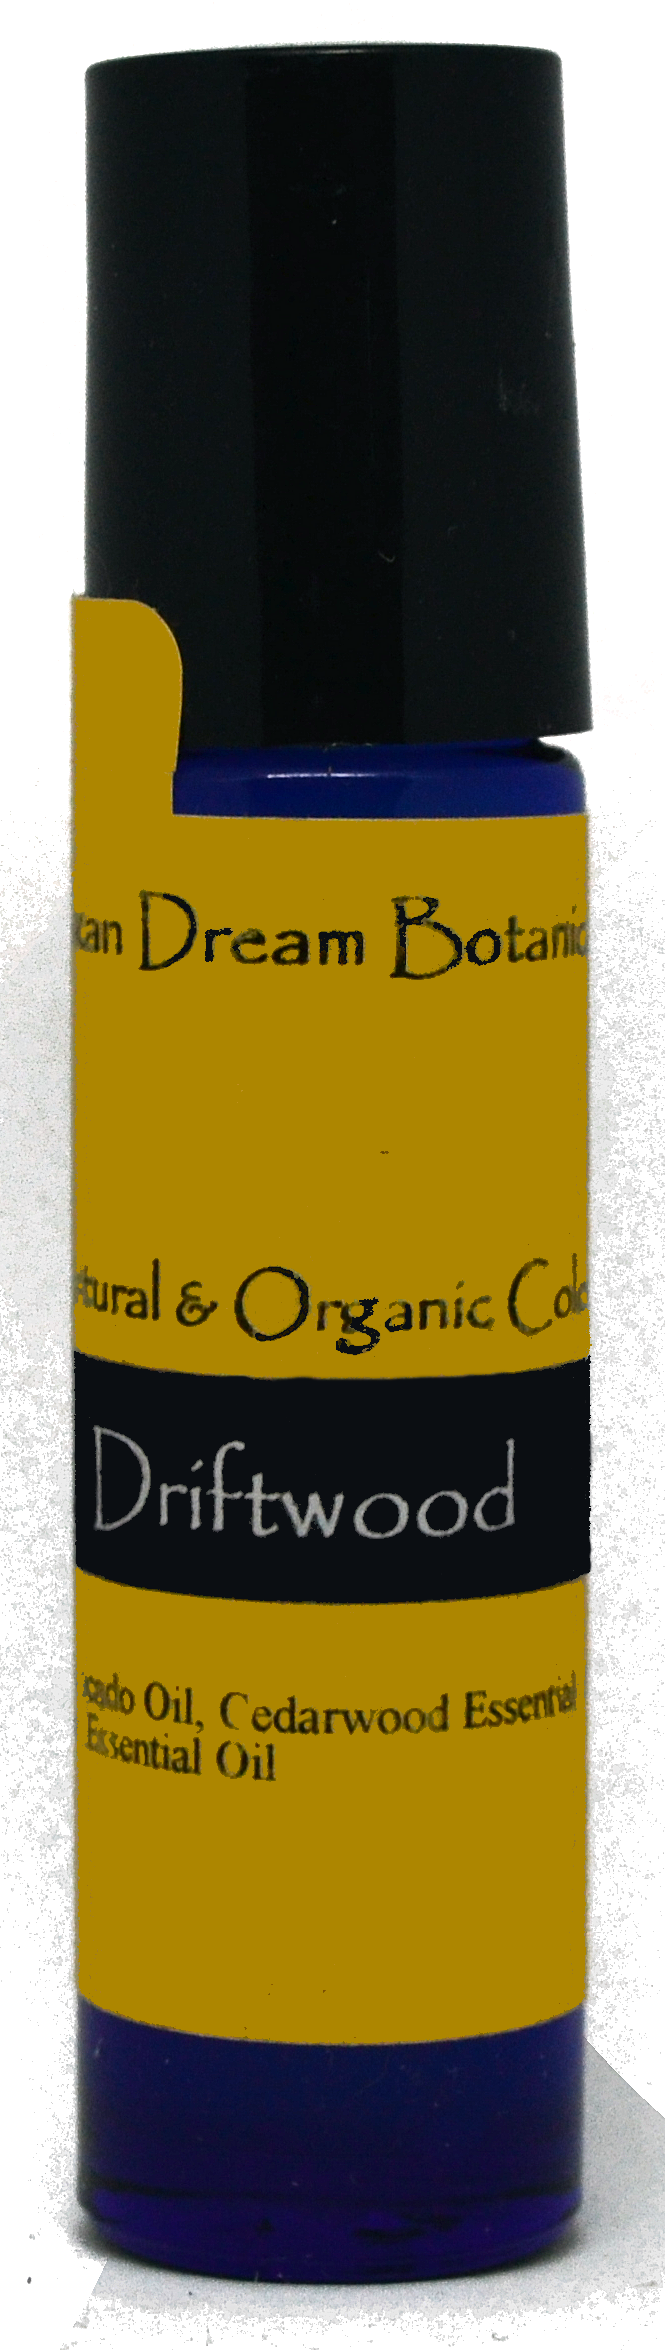 Driftwood Spa Grade Roll On Cologne/Perfume - Alaskan Dream Botanicals